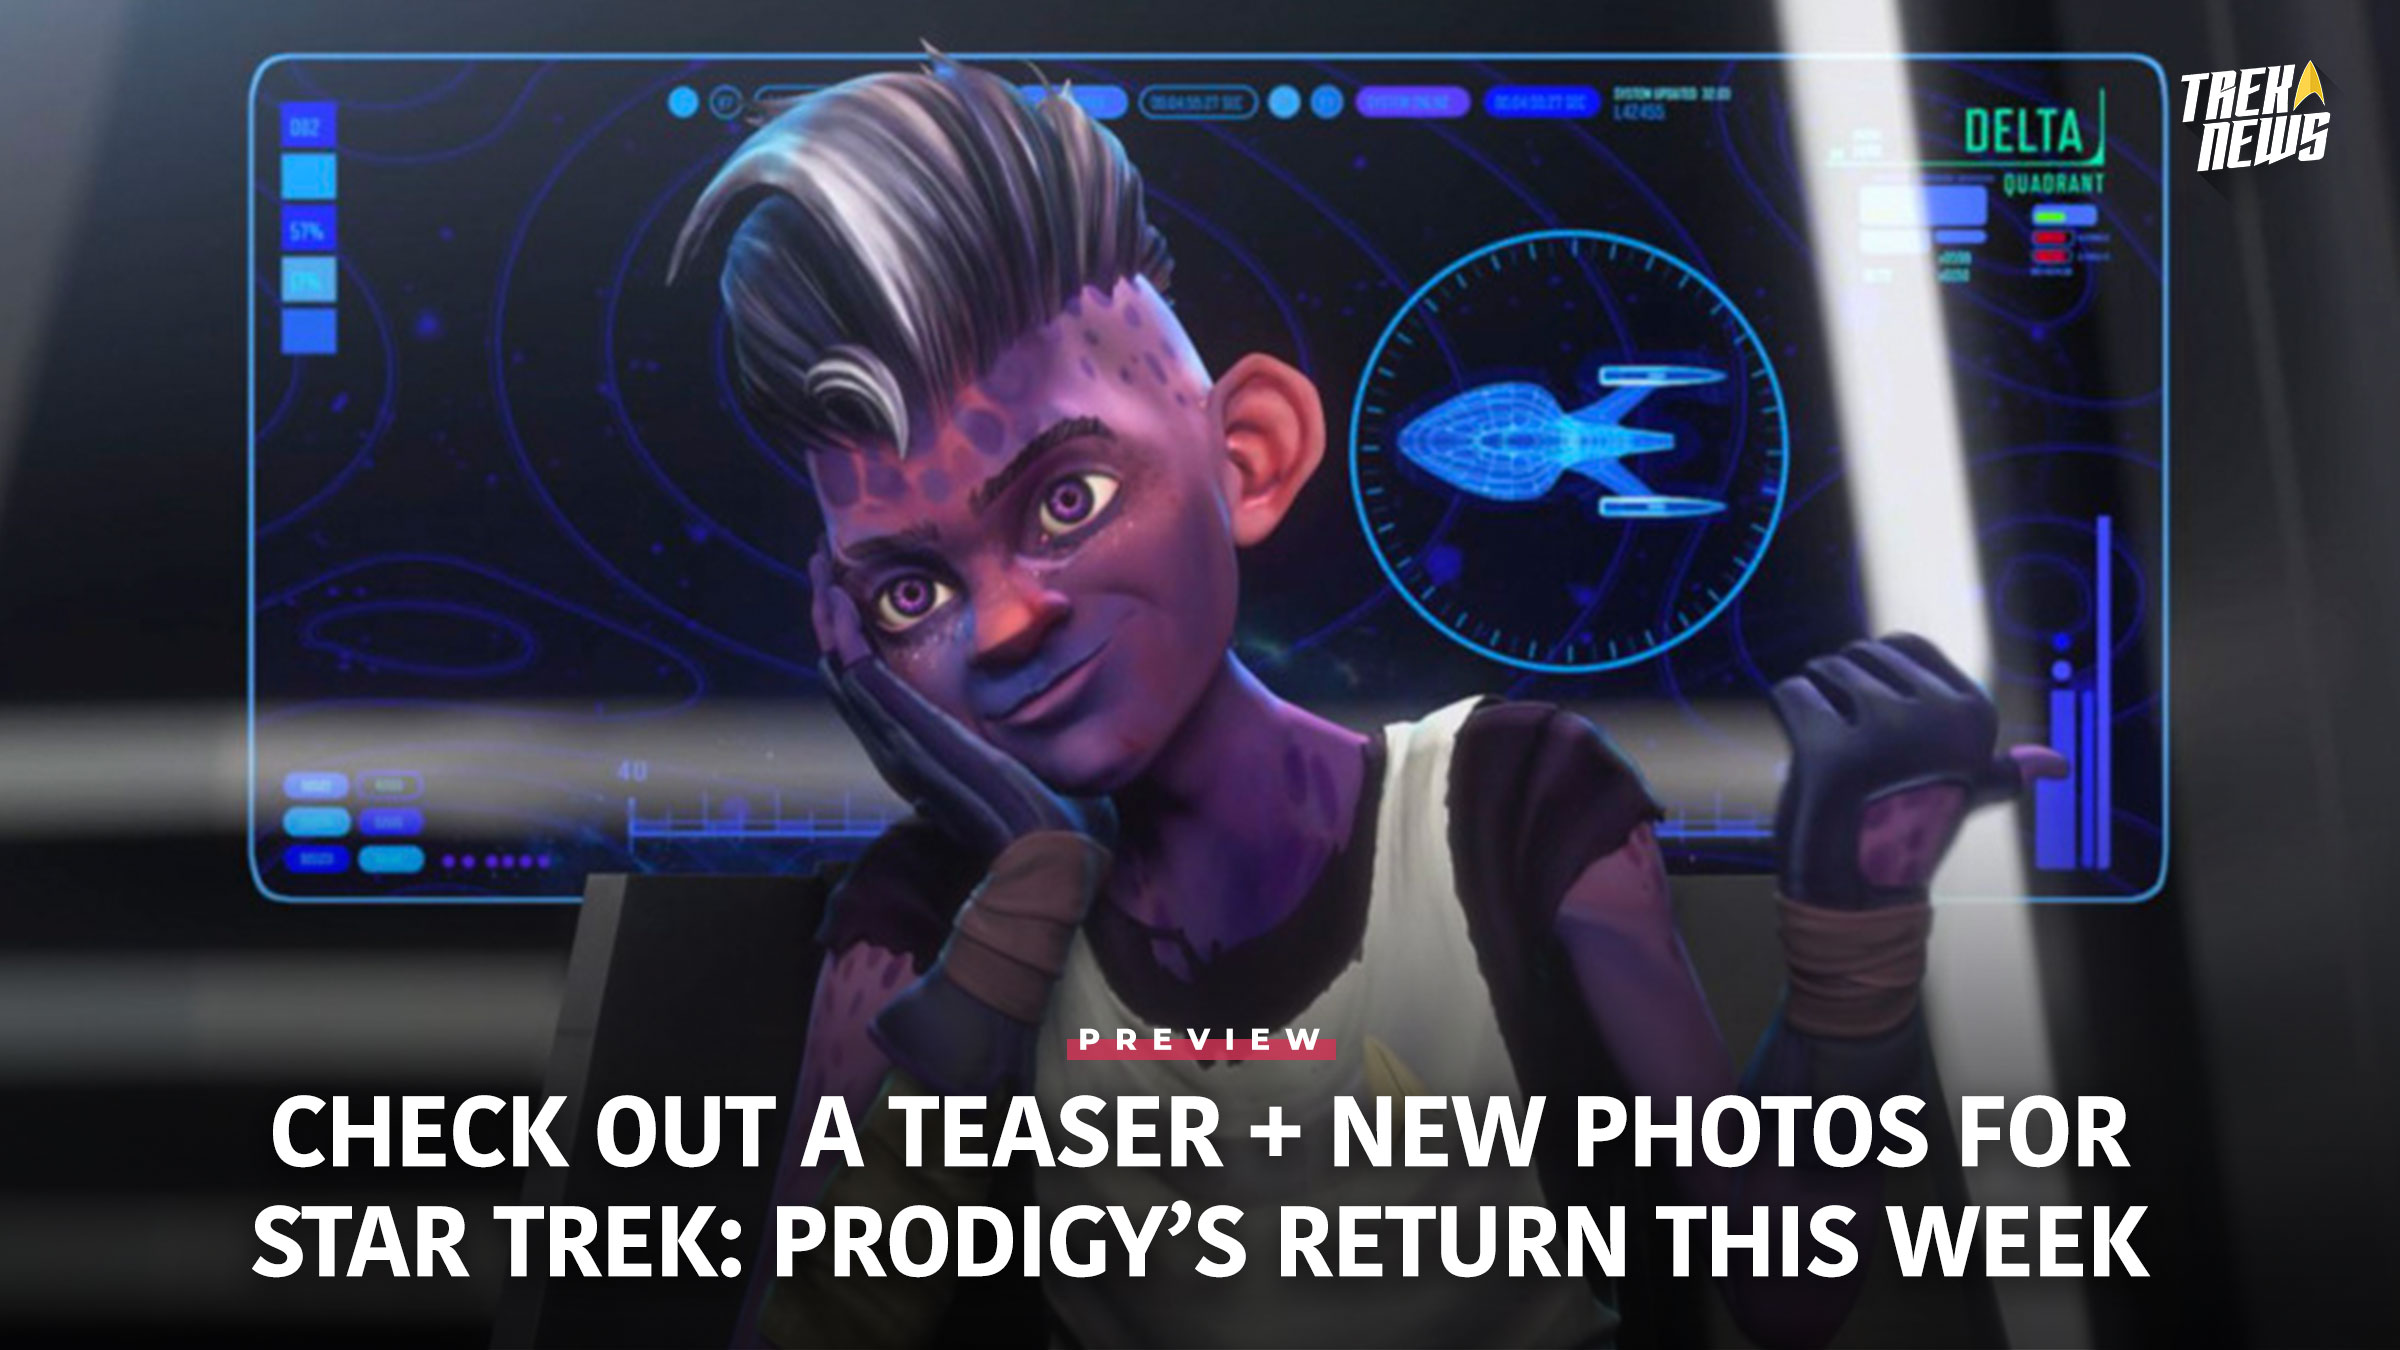 Star Trek: Prodigy Episode 6 “Kobayashi” Preview + New Images